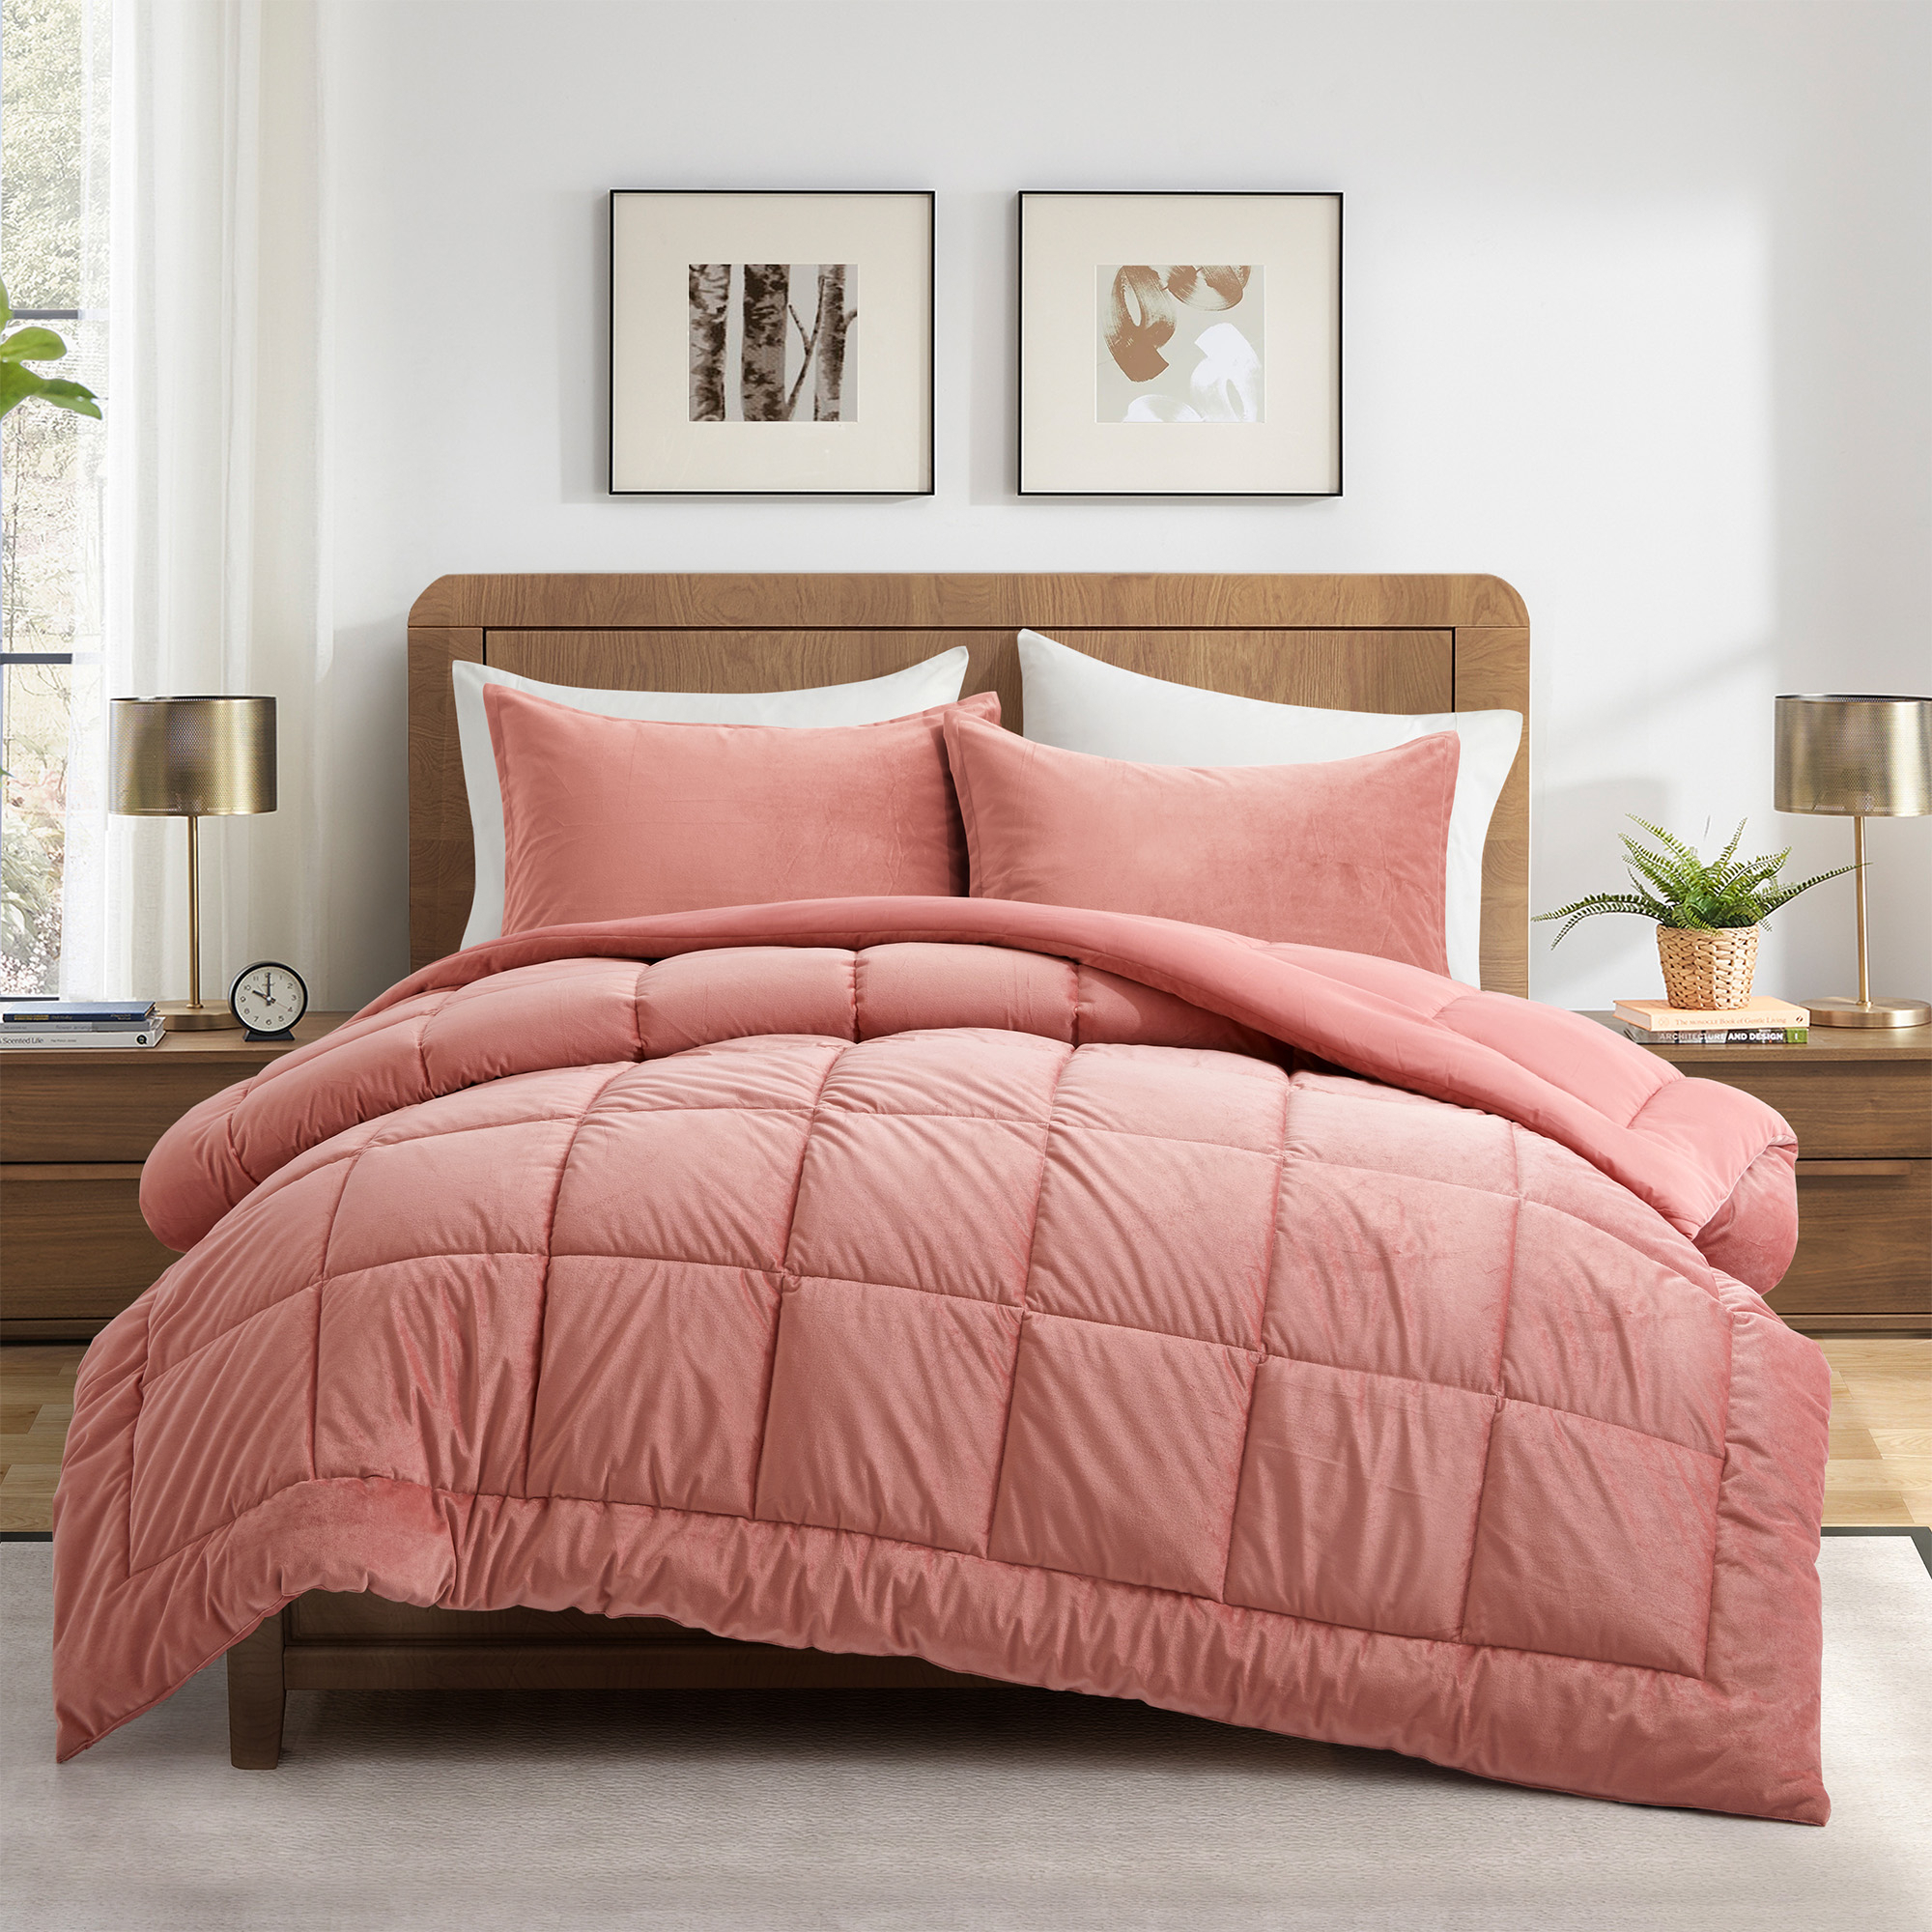 3 Piece Reversible Velvet Comforter Set With Sham - Pink, King